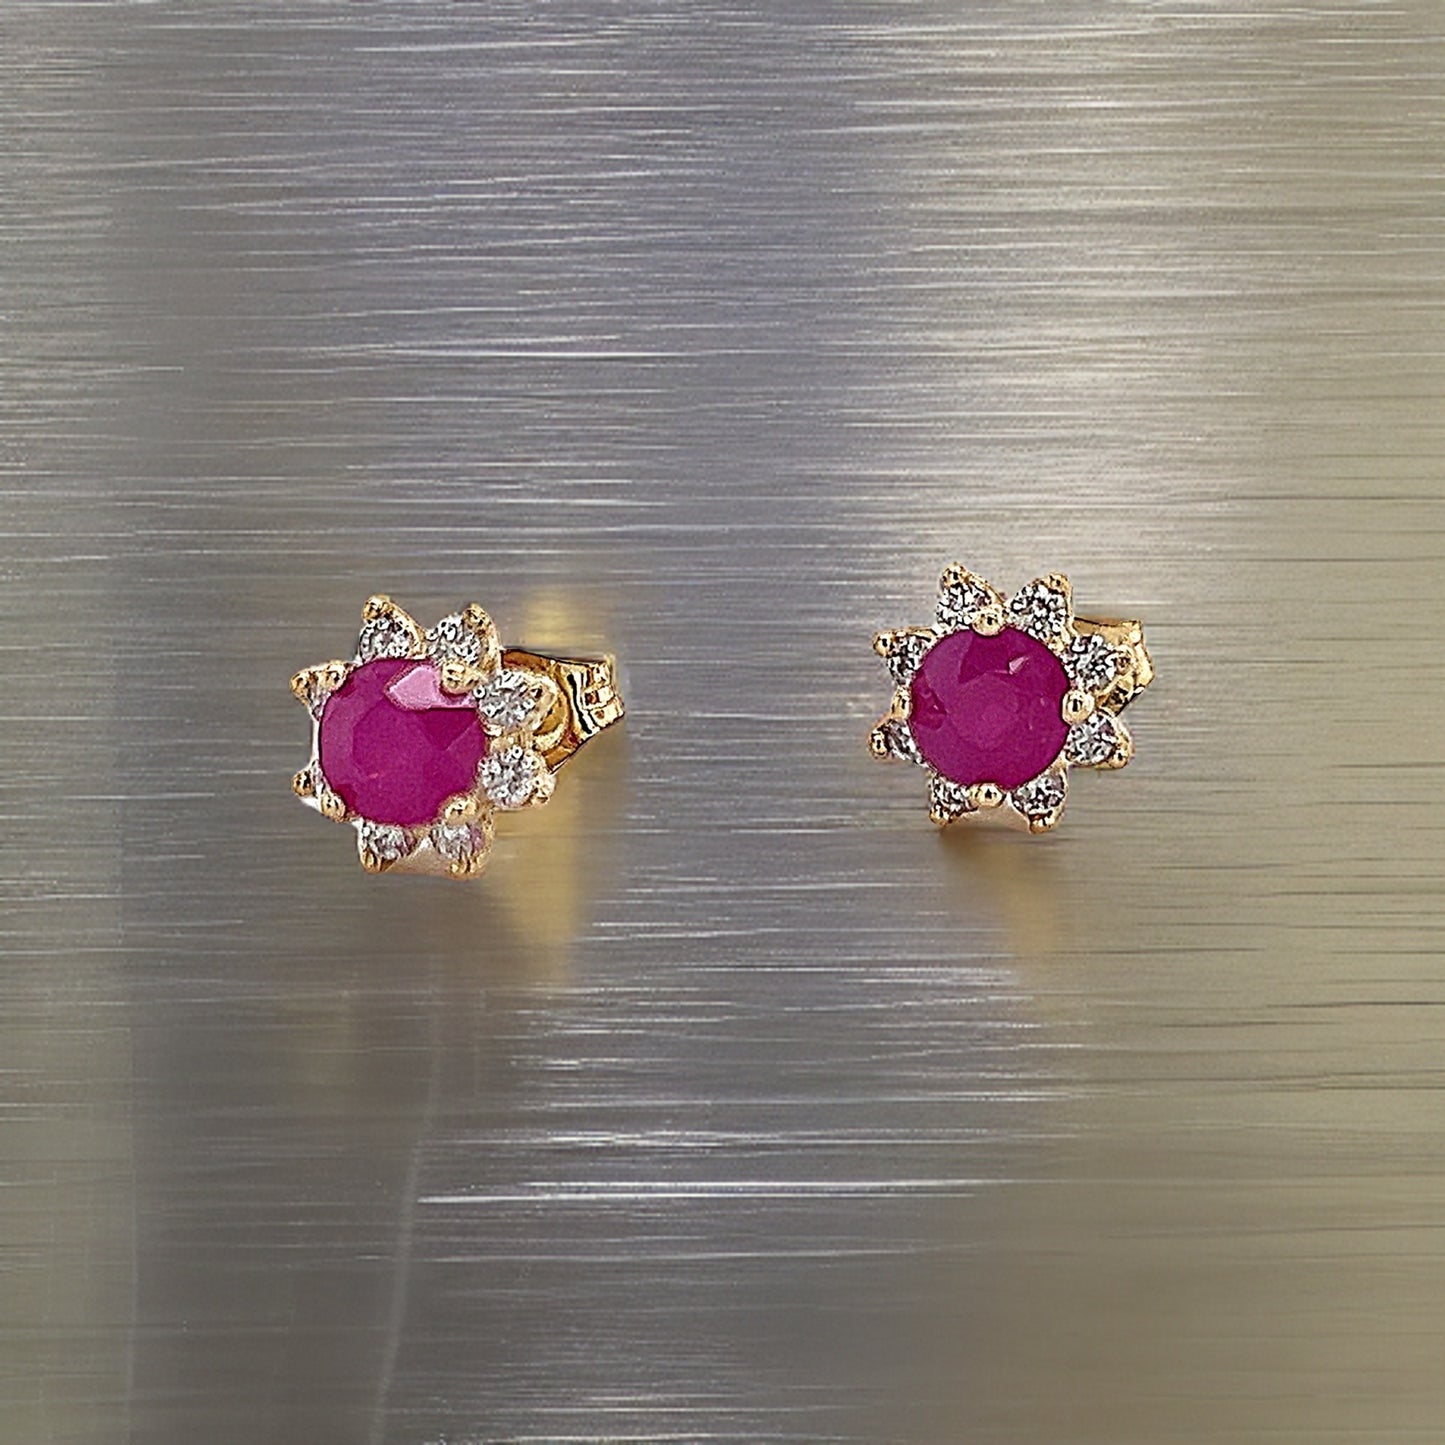 Natural Ruby Diamond Earrings 14k Gold 1.25 TCW Certified $2,290 210748